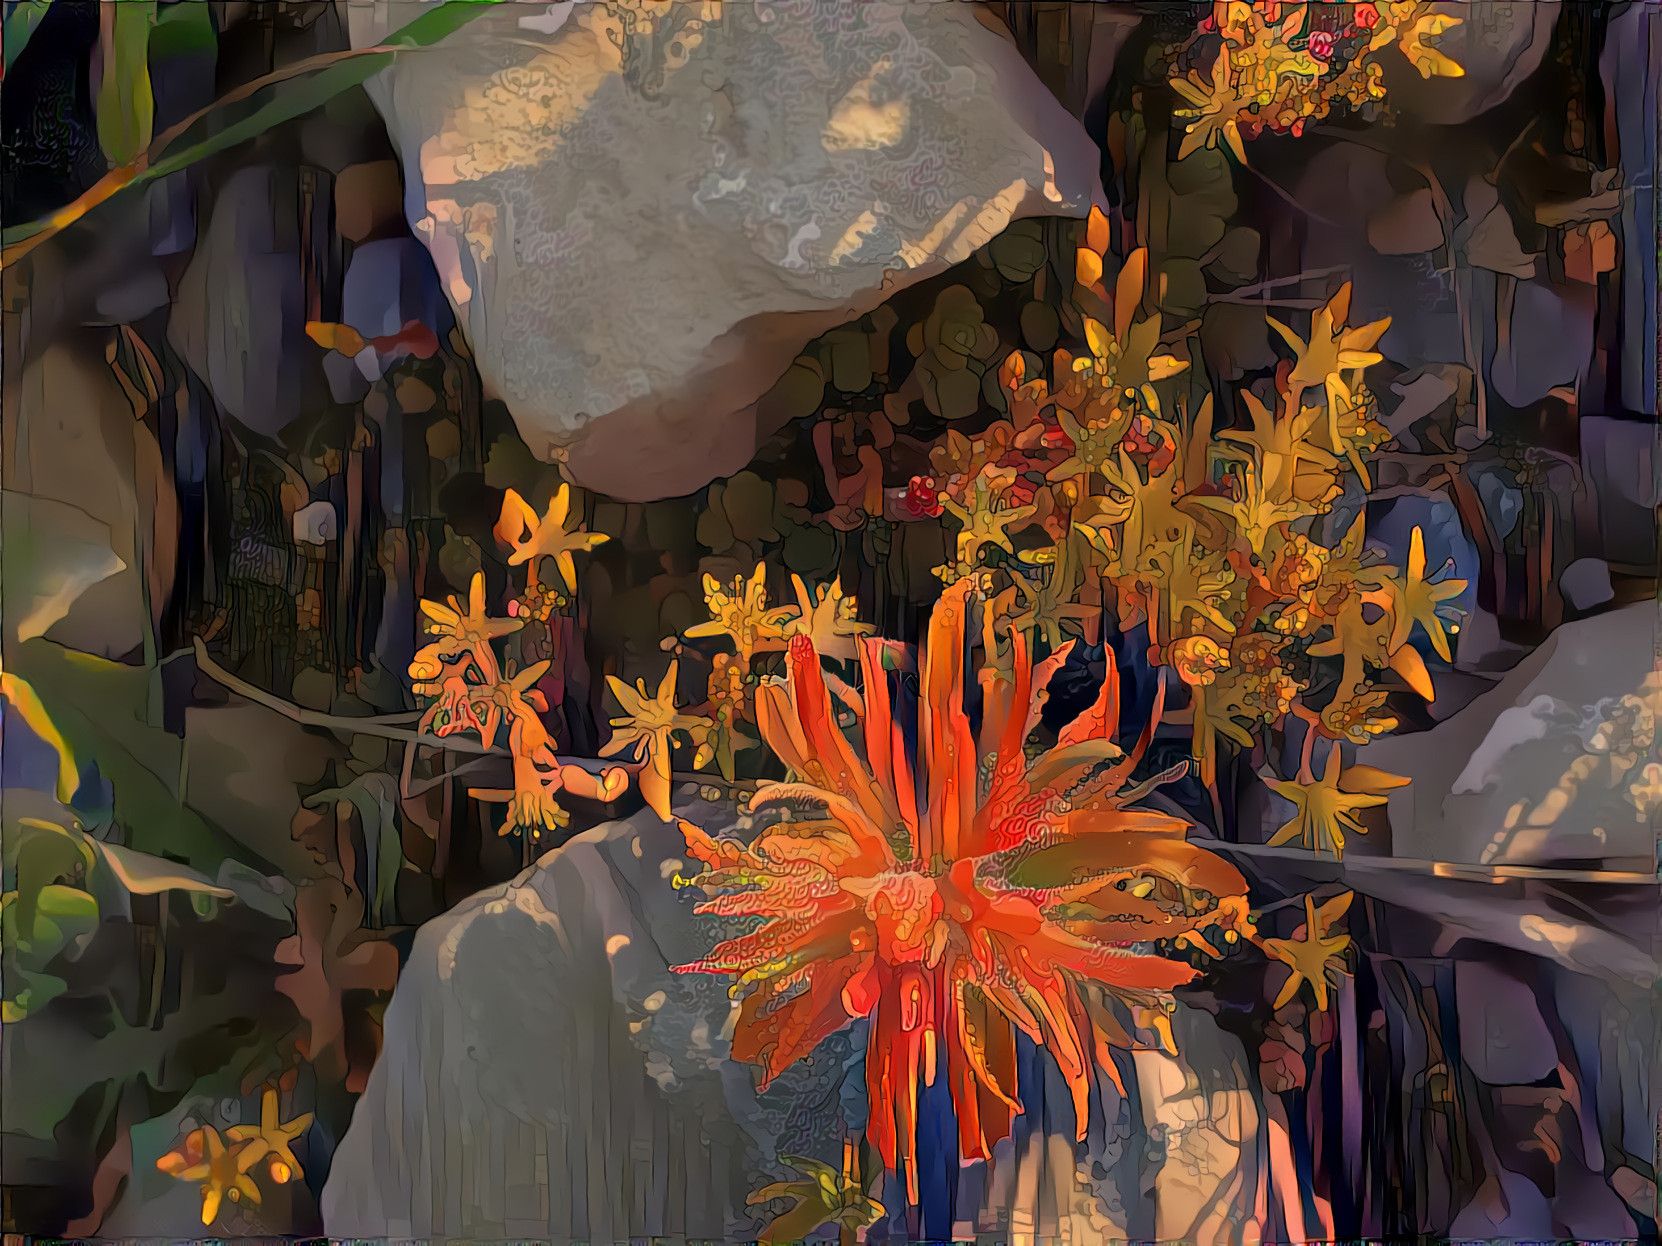  Wildflowers in the rocks